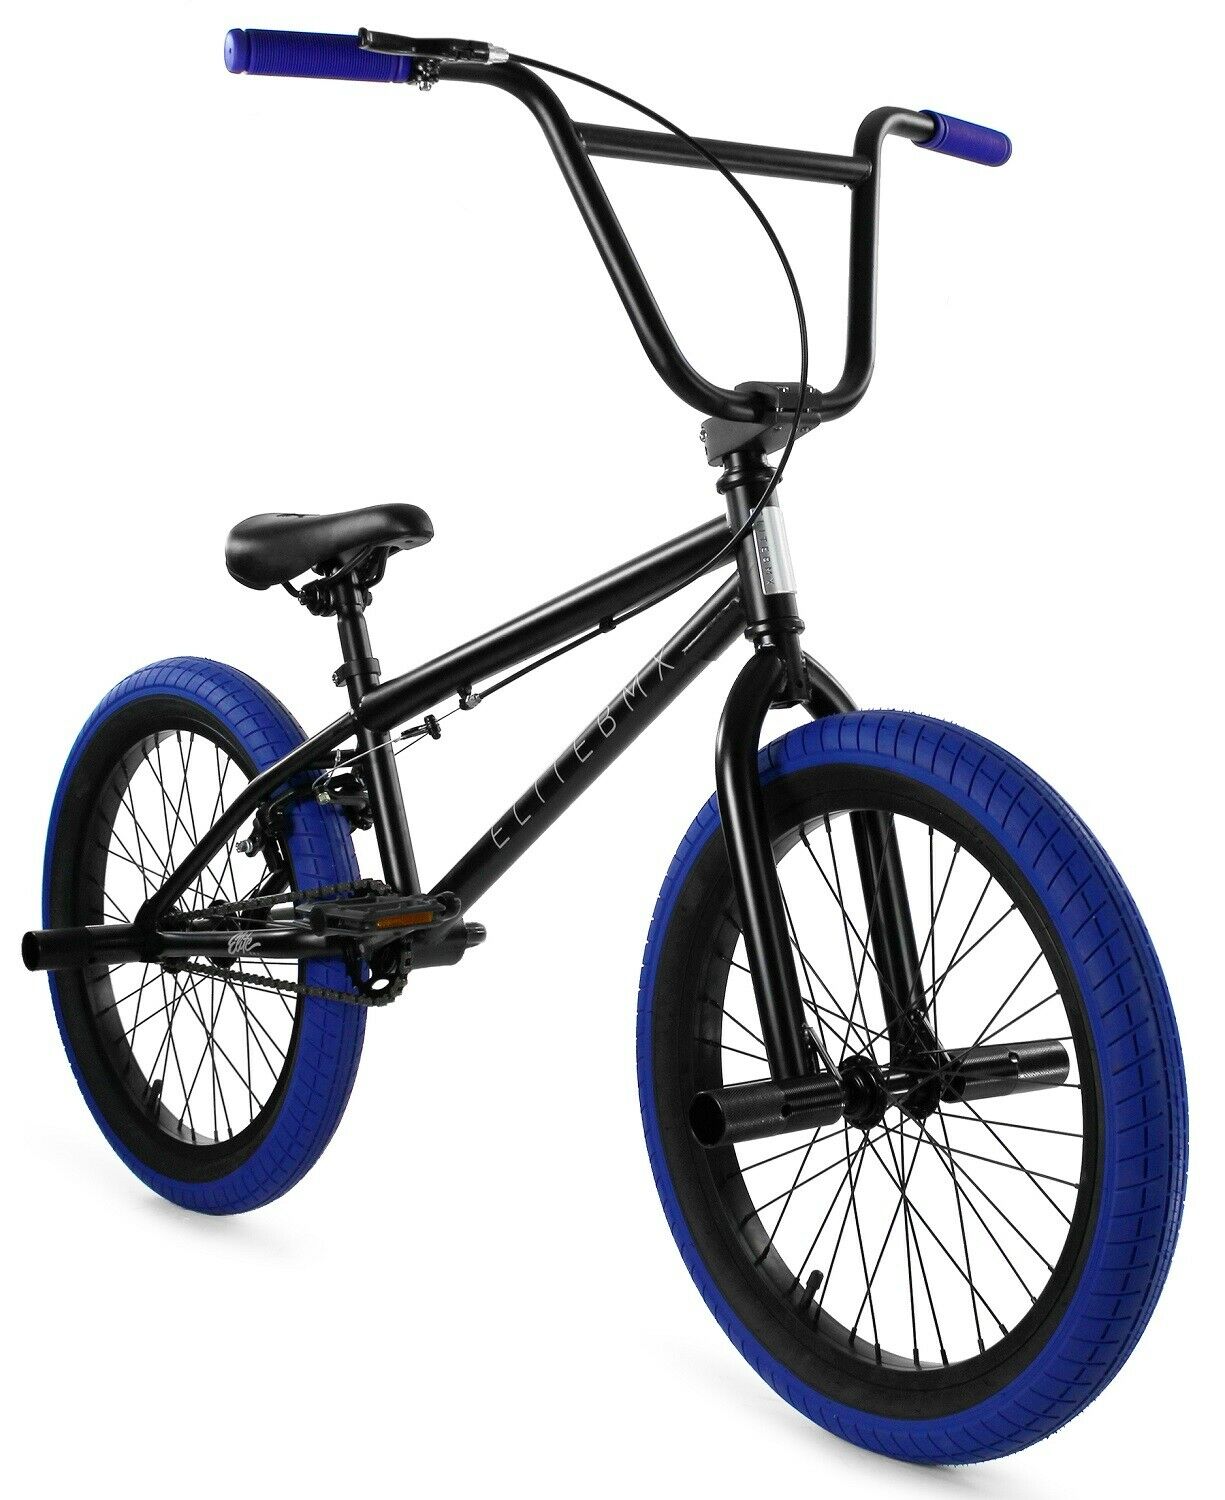 Elite 20" Bmx Stealth Bicycle Freestyle Bike 1 Piece Crank Black Blue New 2021